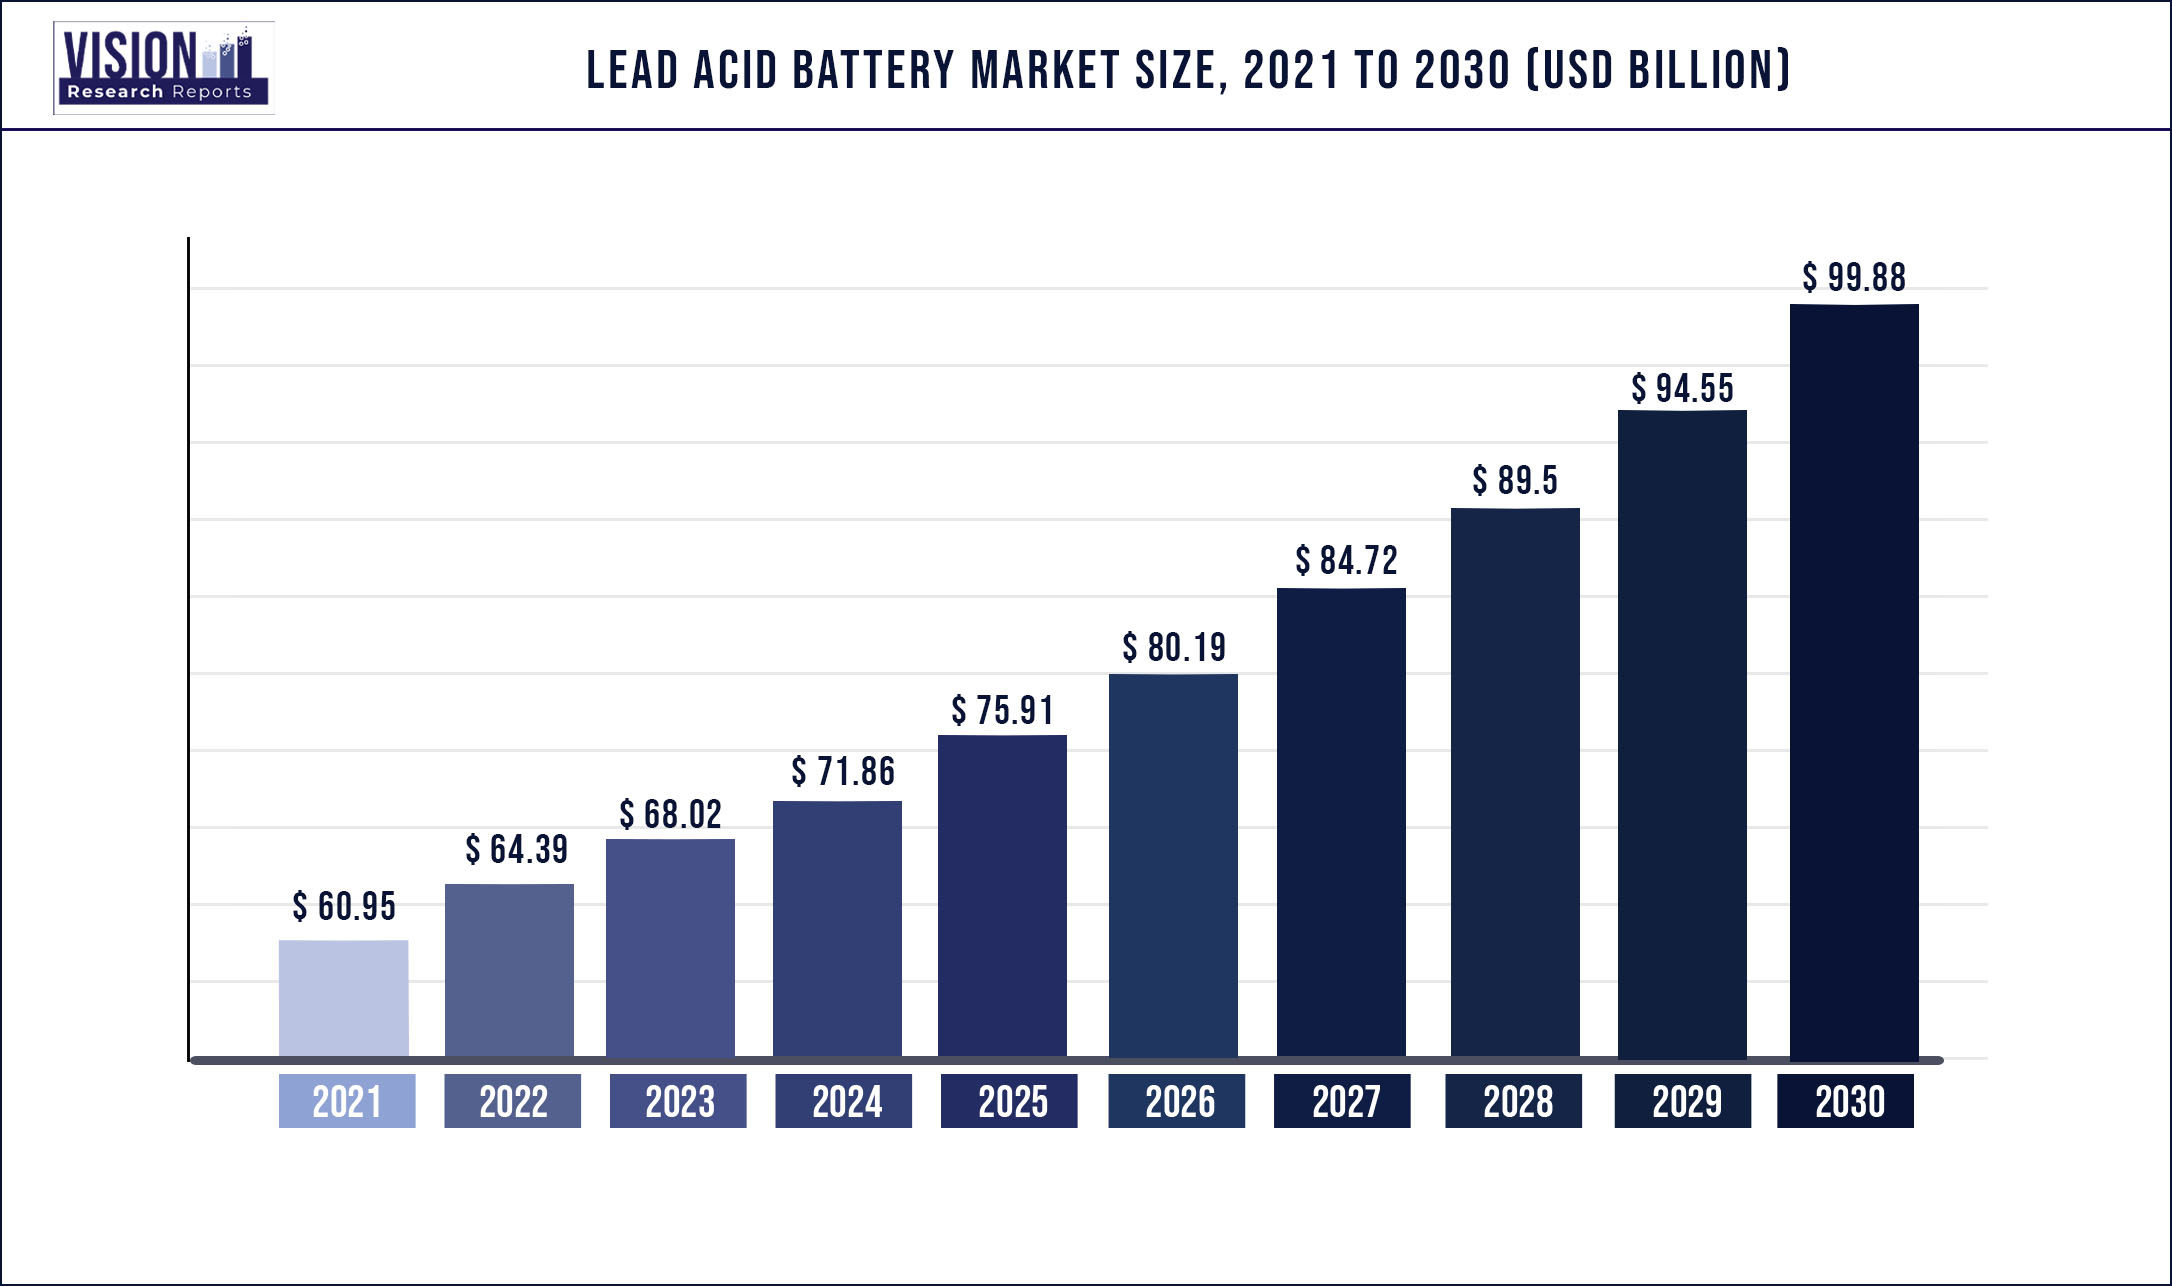 Lead Acid Battery Market Size 2021 to 2030